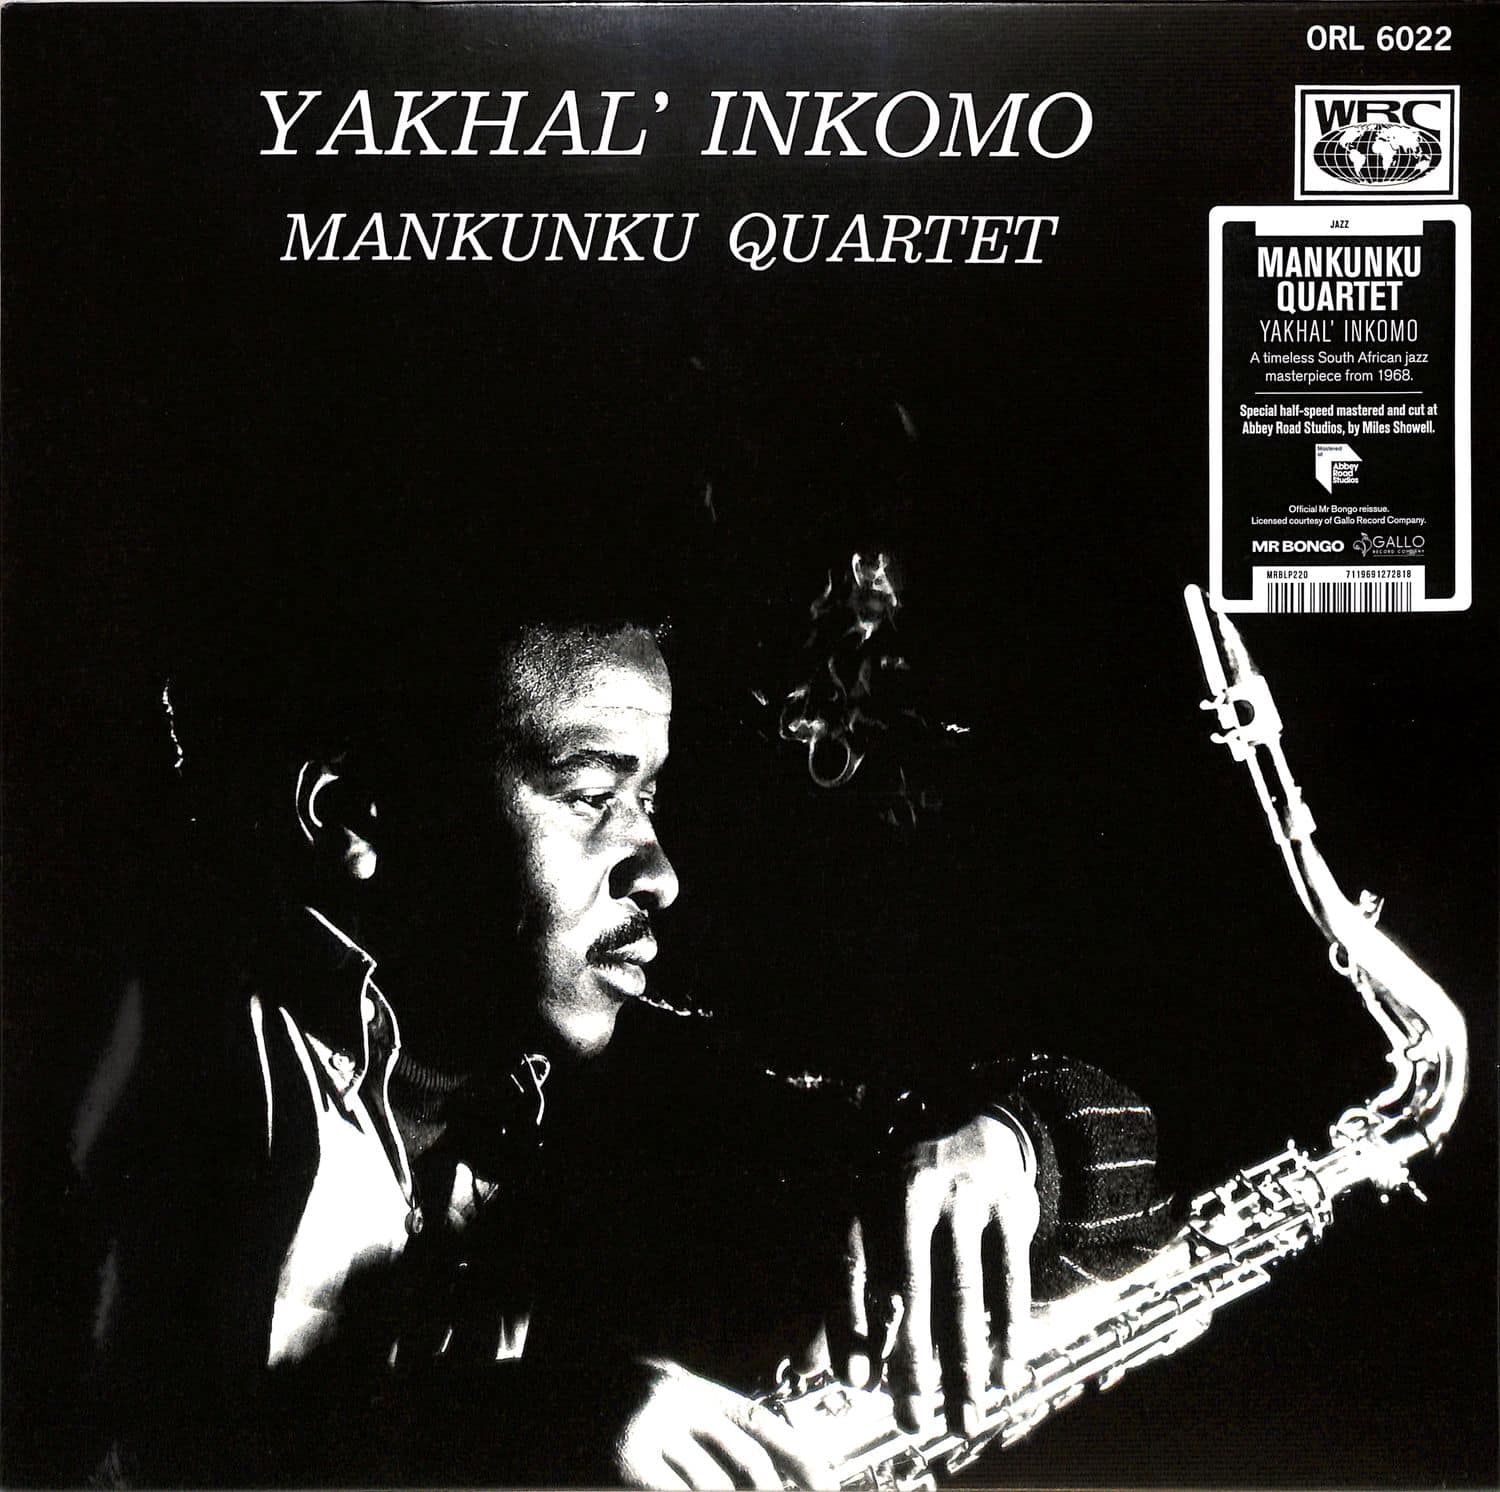 Mankunku Quartet - YAKHAL INKOMO 